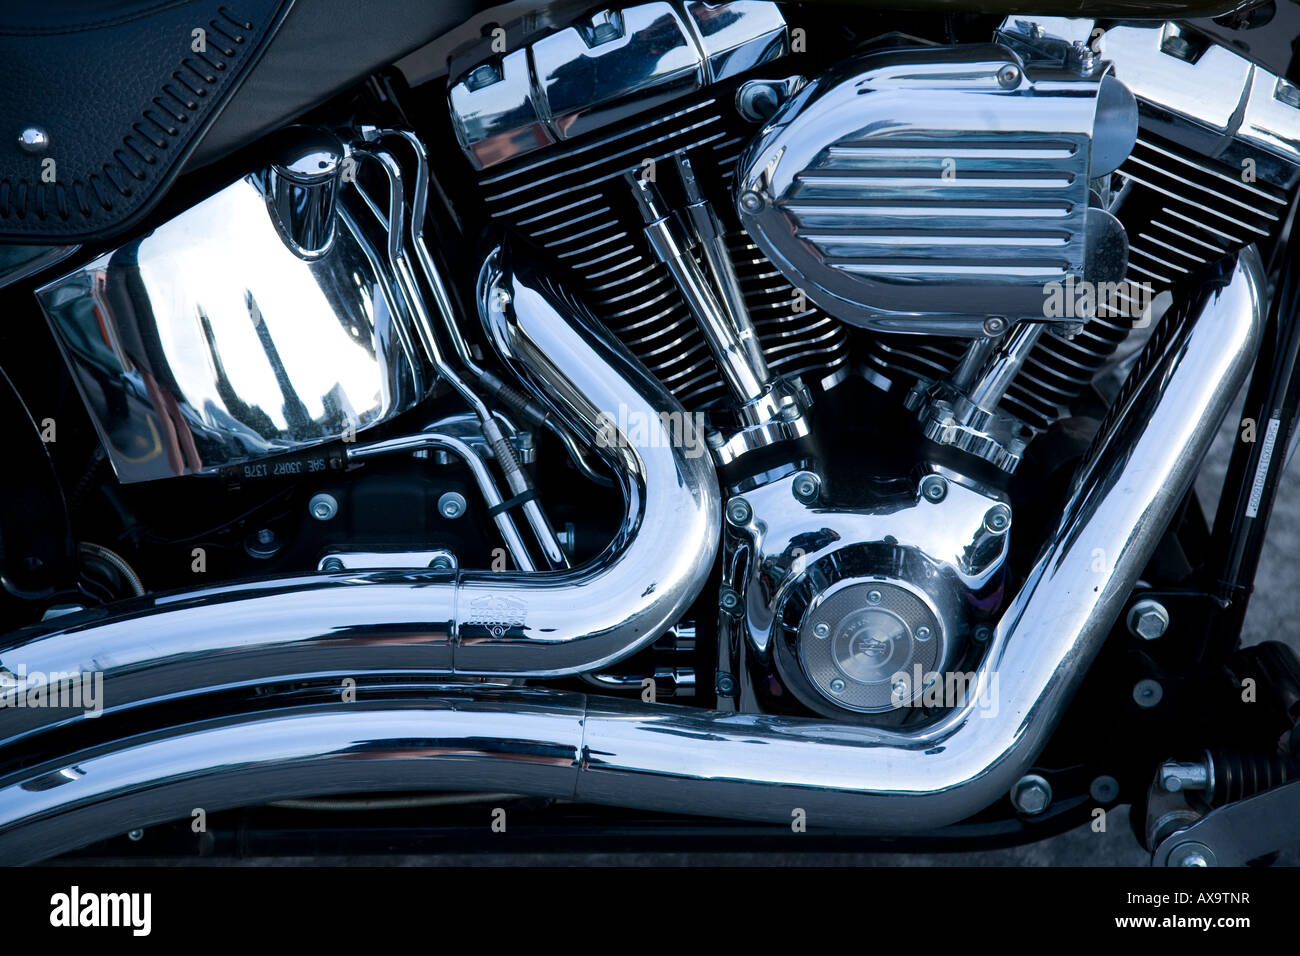 Motor von einem Harley Davidson Motorrad Stockfoto